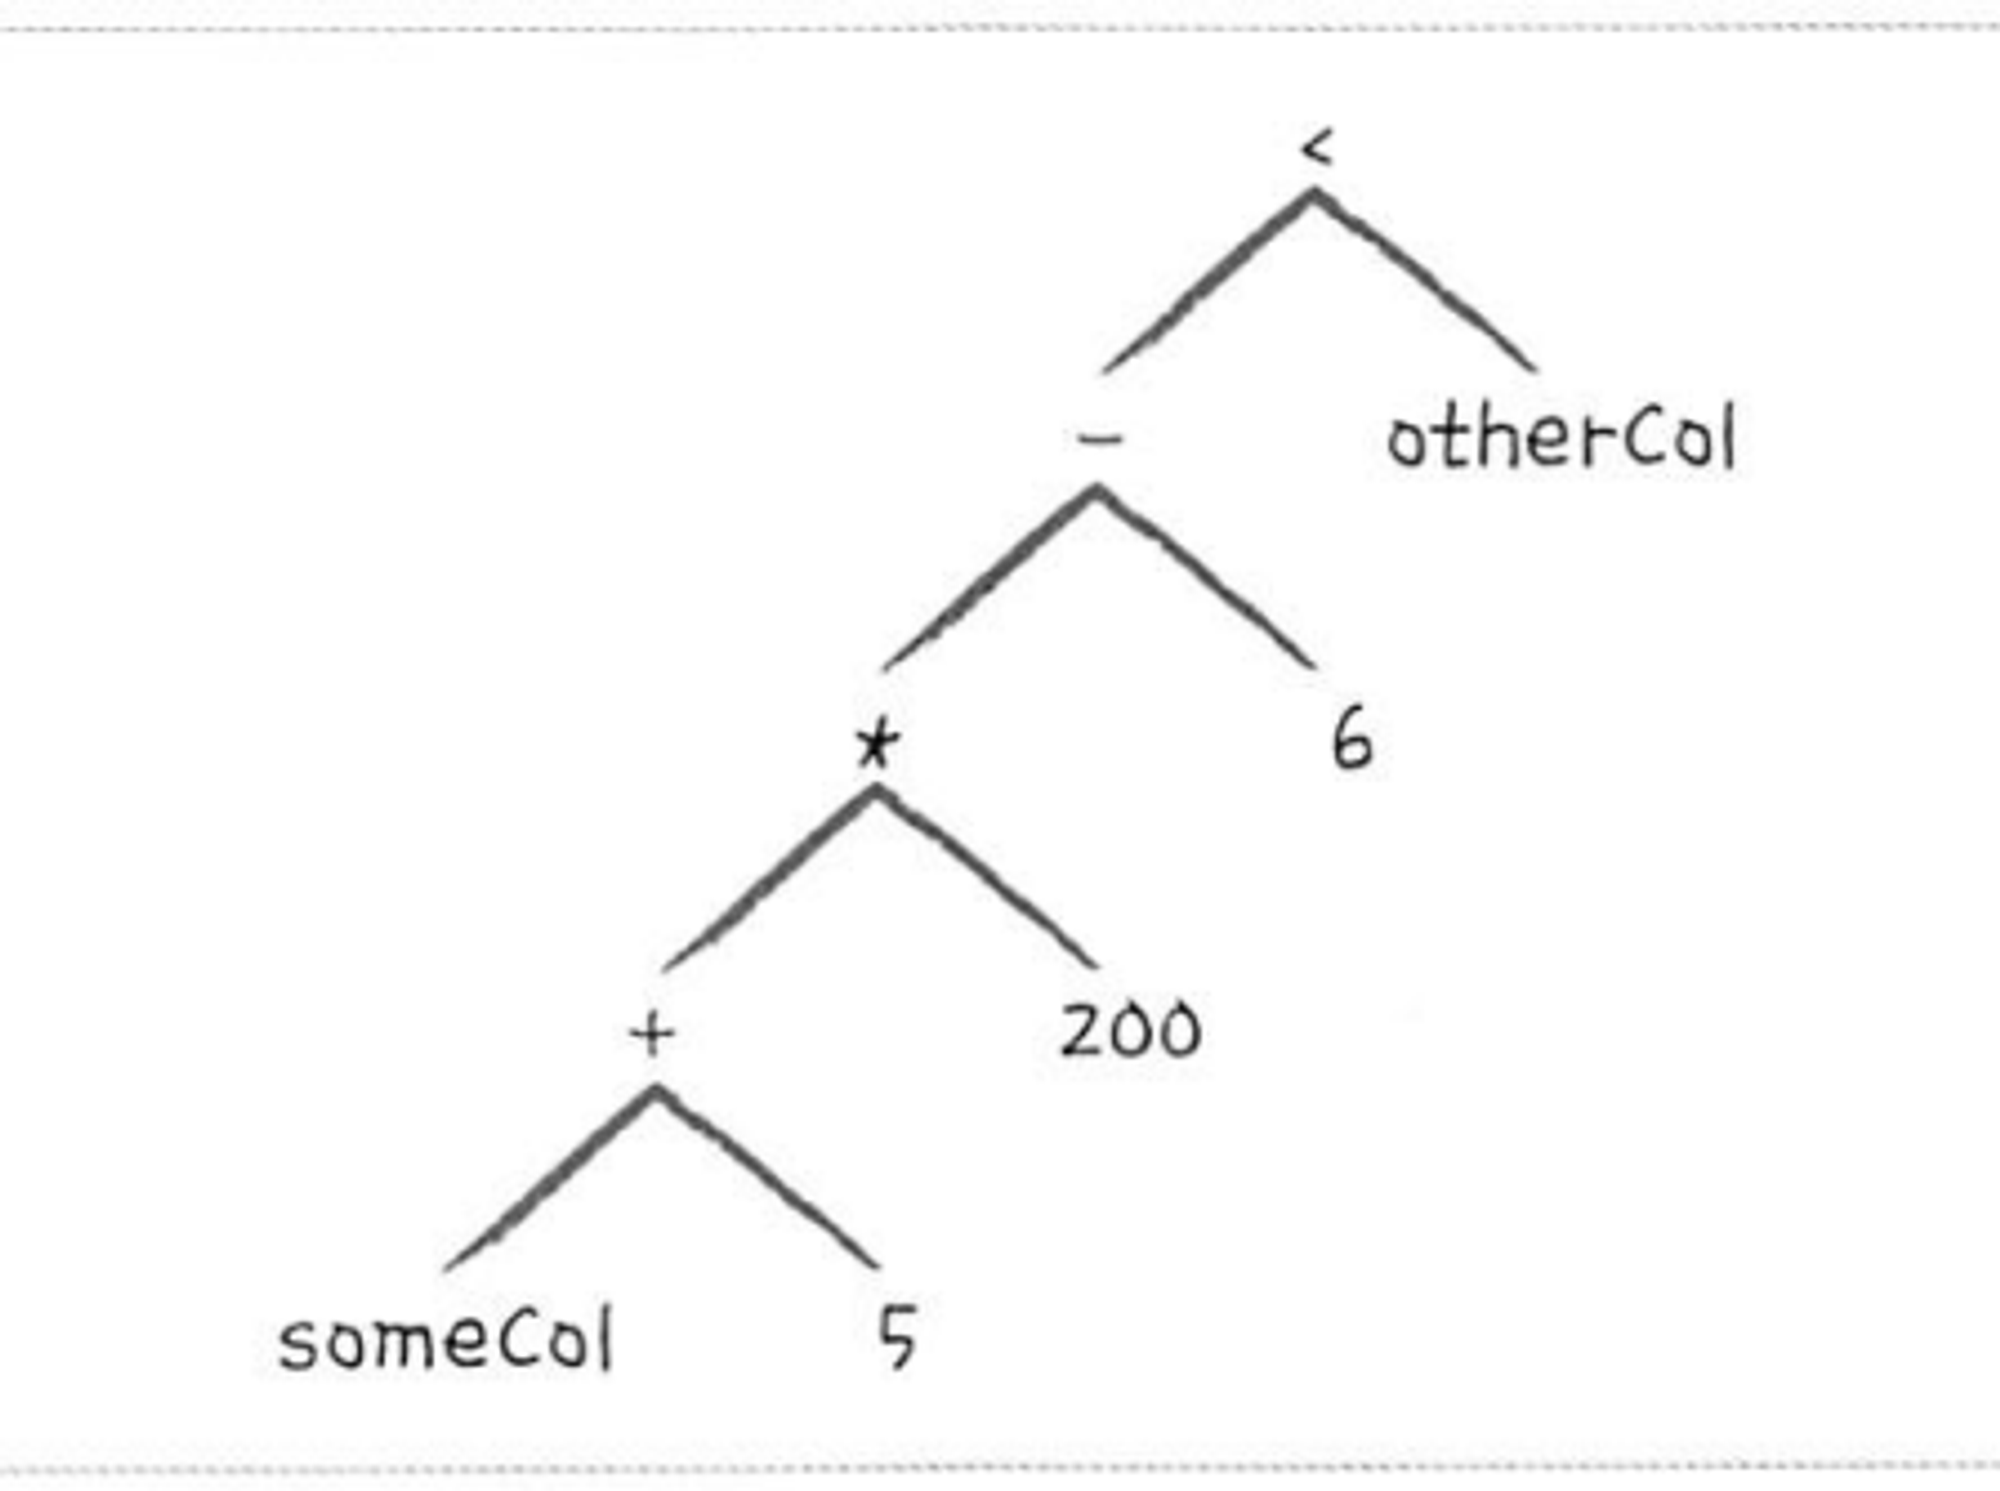 logical tree